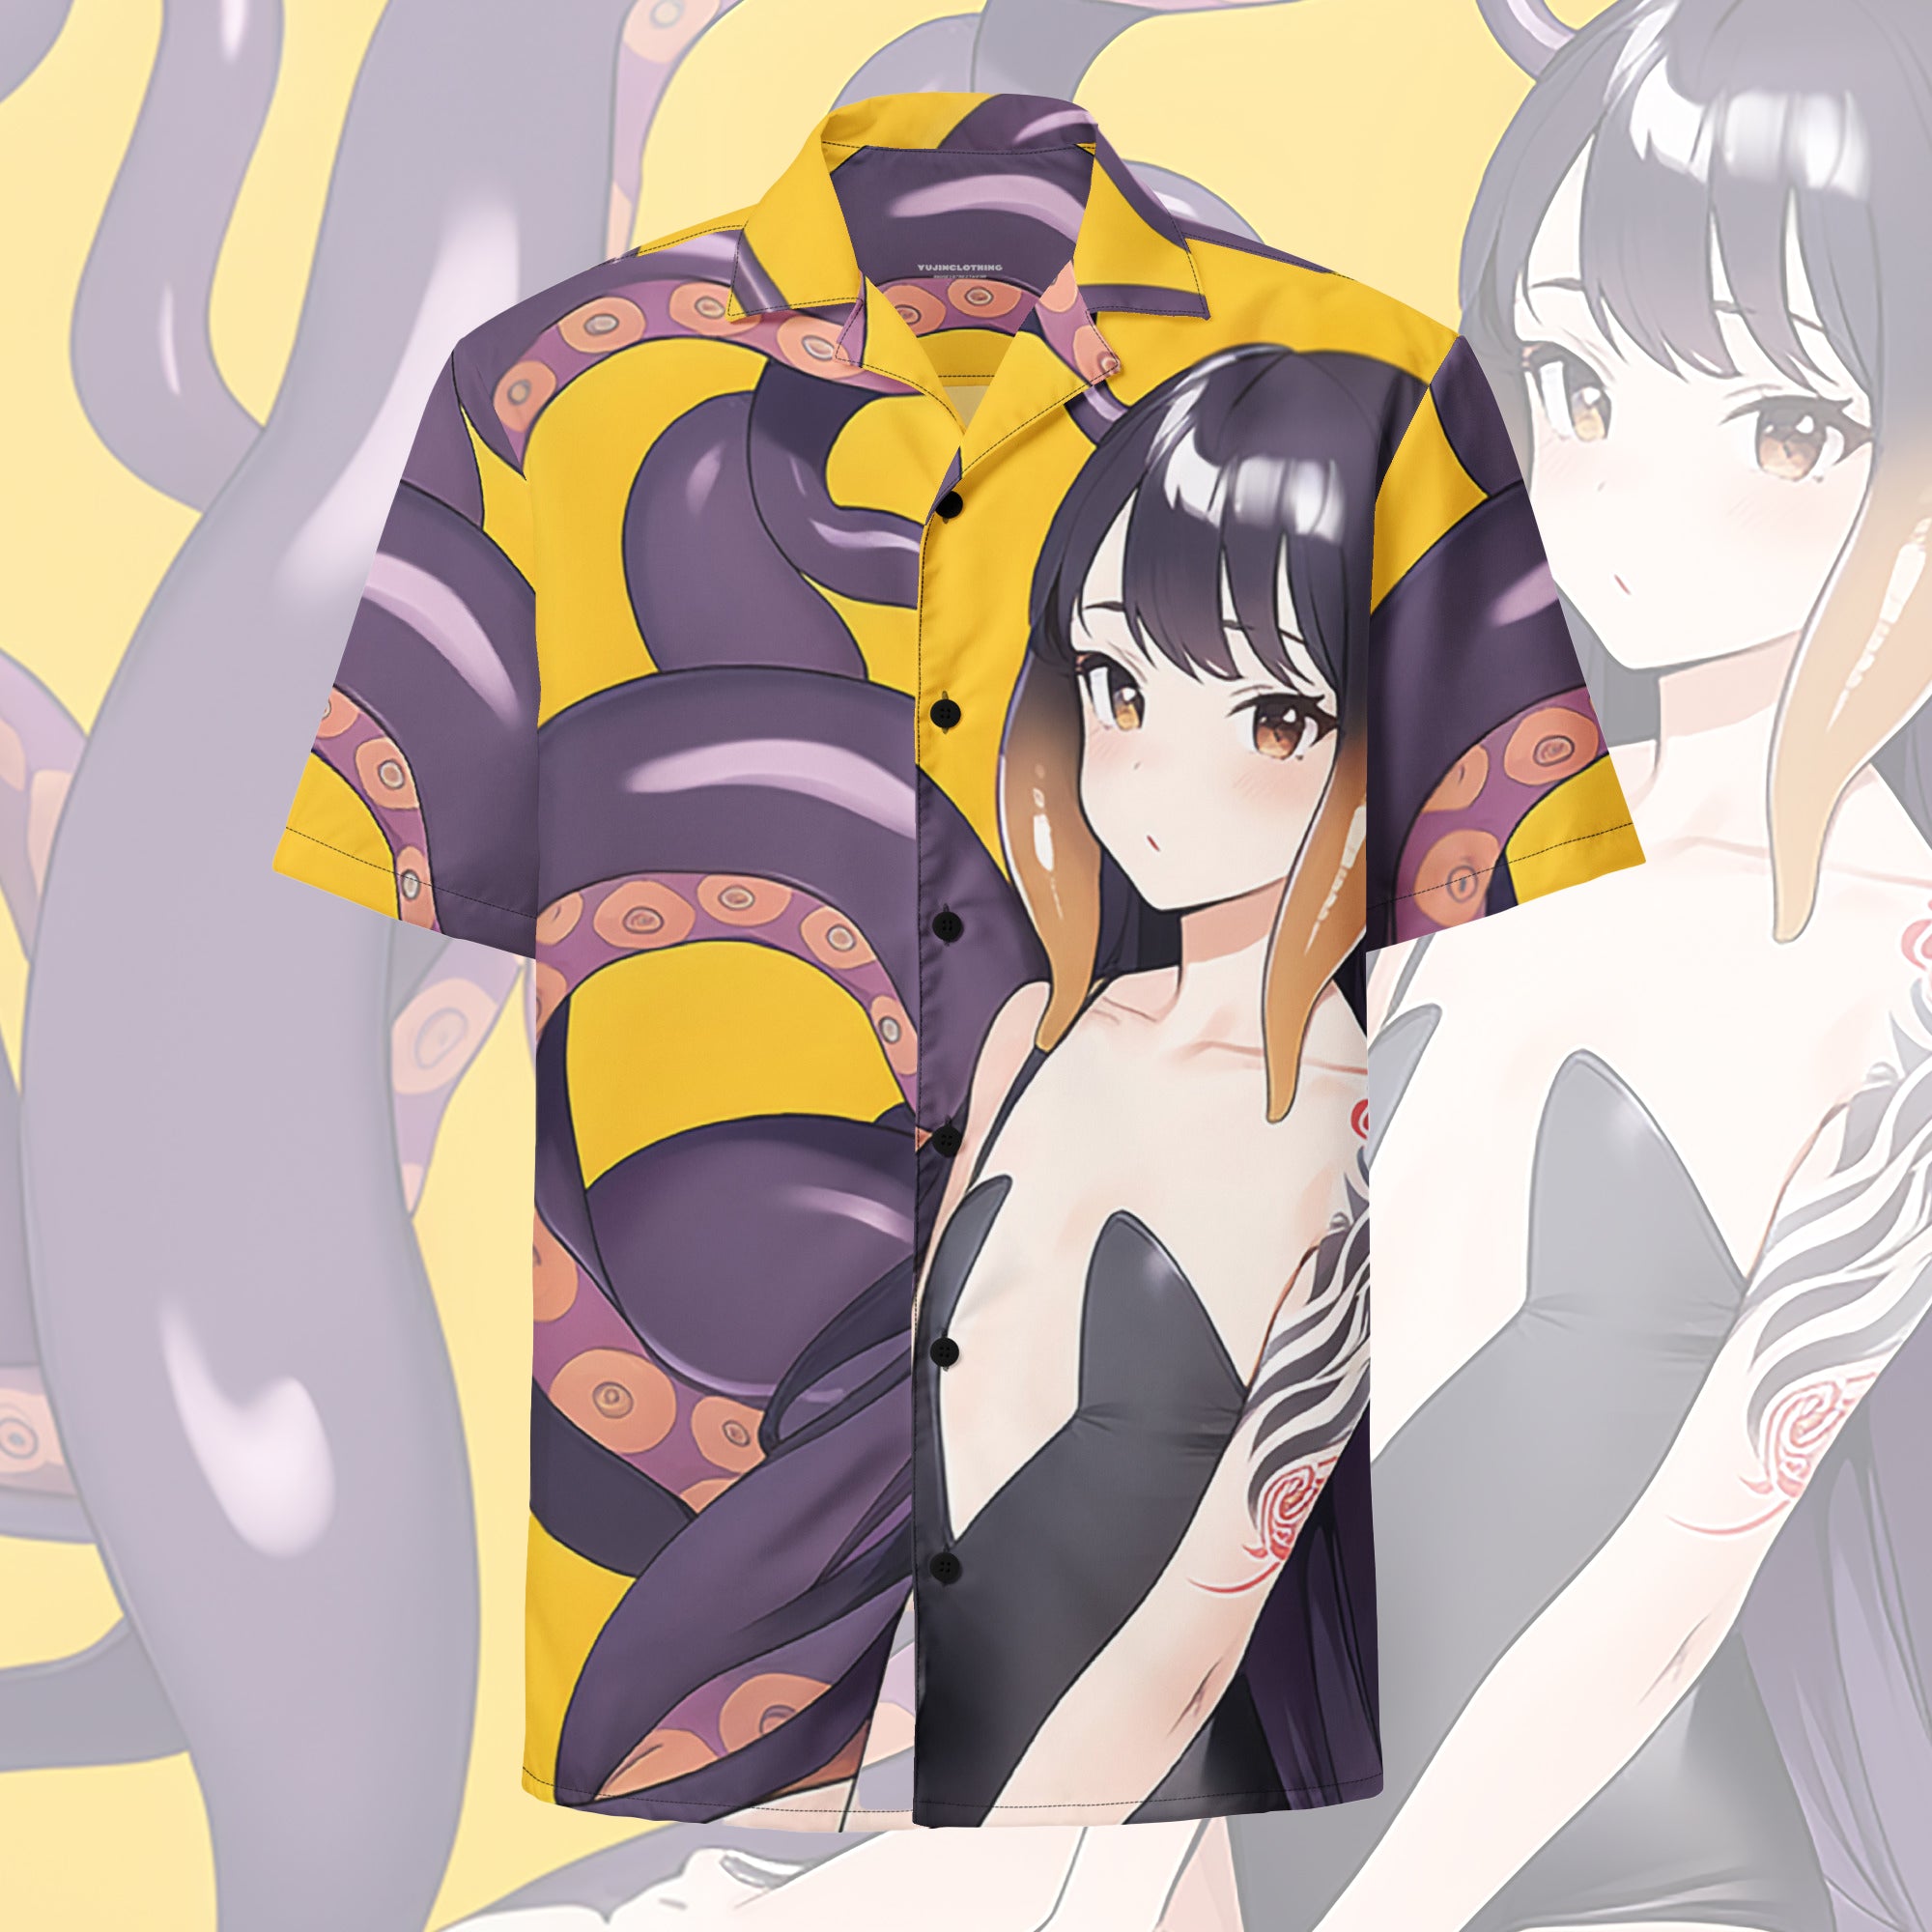 Deep Temptation Bundle | Yūjin Japanese Anime Streetwear Clothing